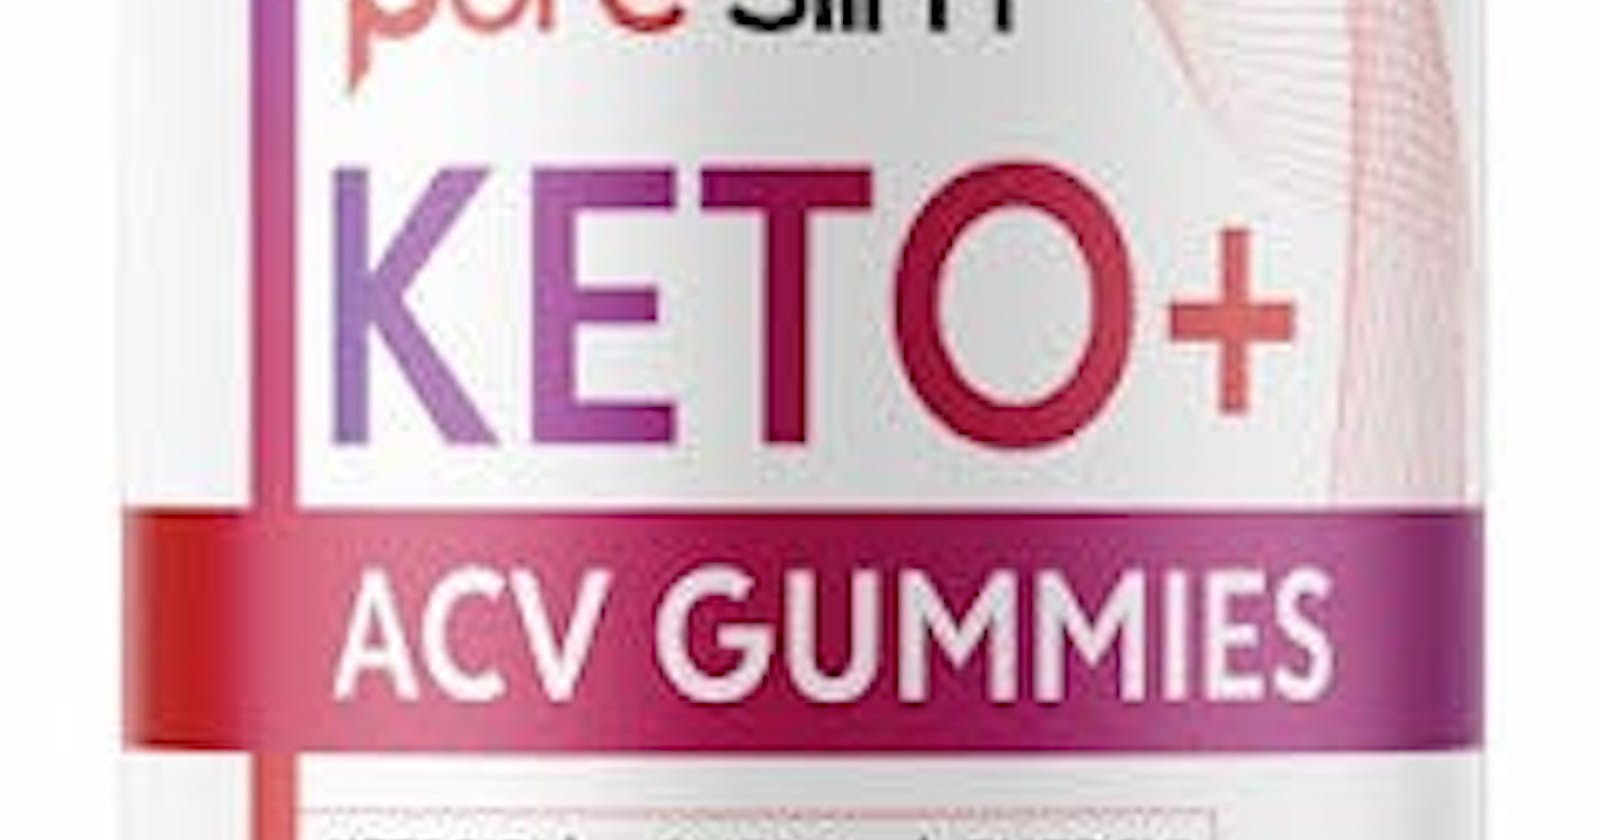 Pure Slim Keto Plus ACV Gummies WEIGHT LOSS GUMMY DANGERS OR LEGIT SUPPLEMENT?